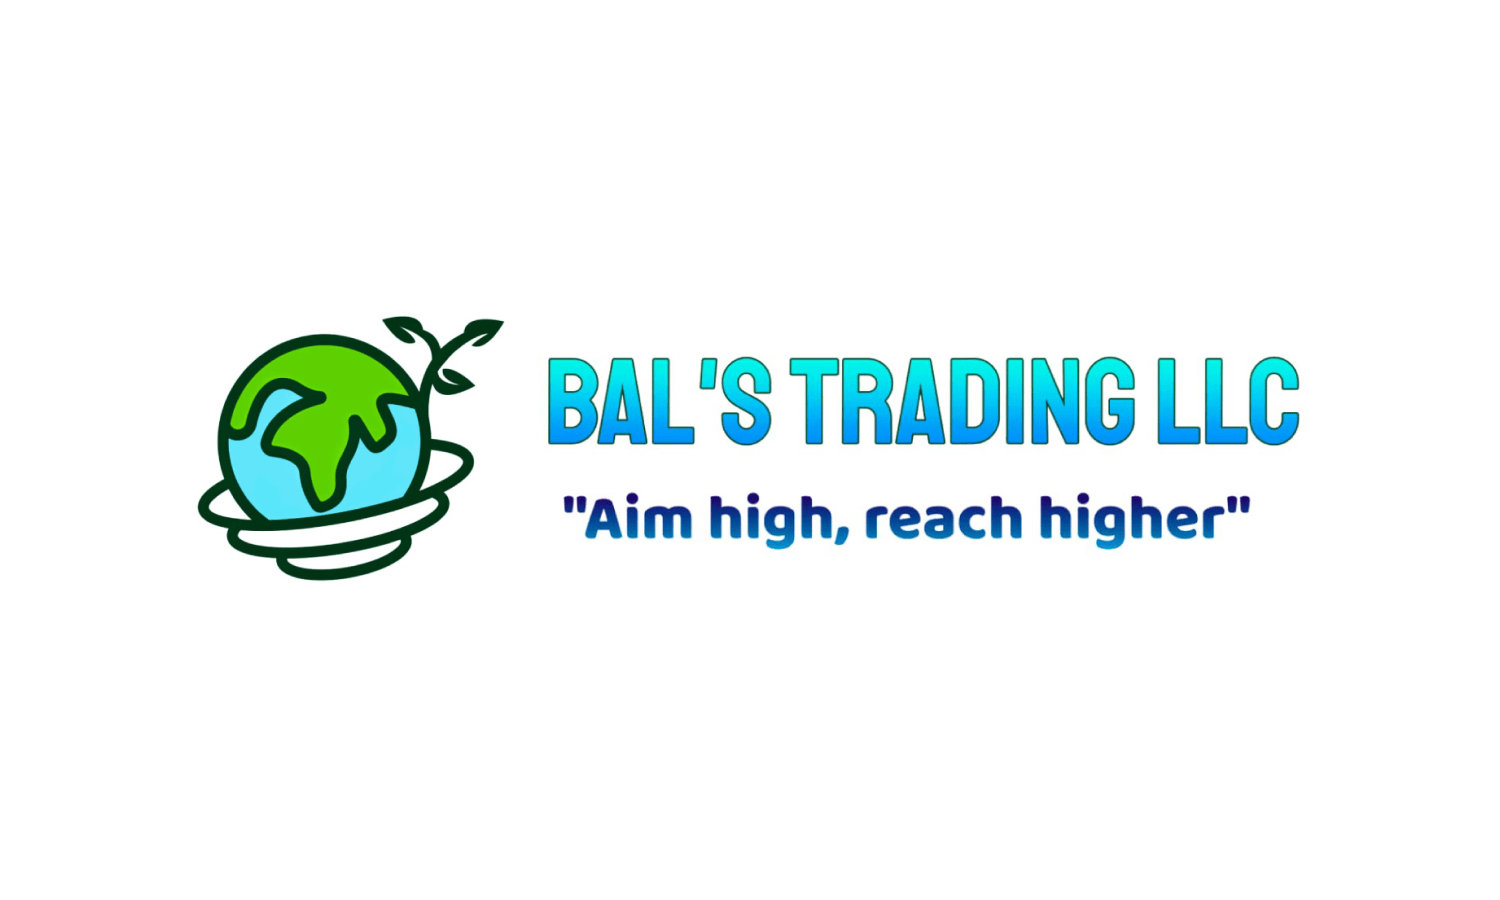 bal's trading llc